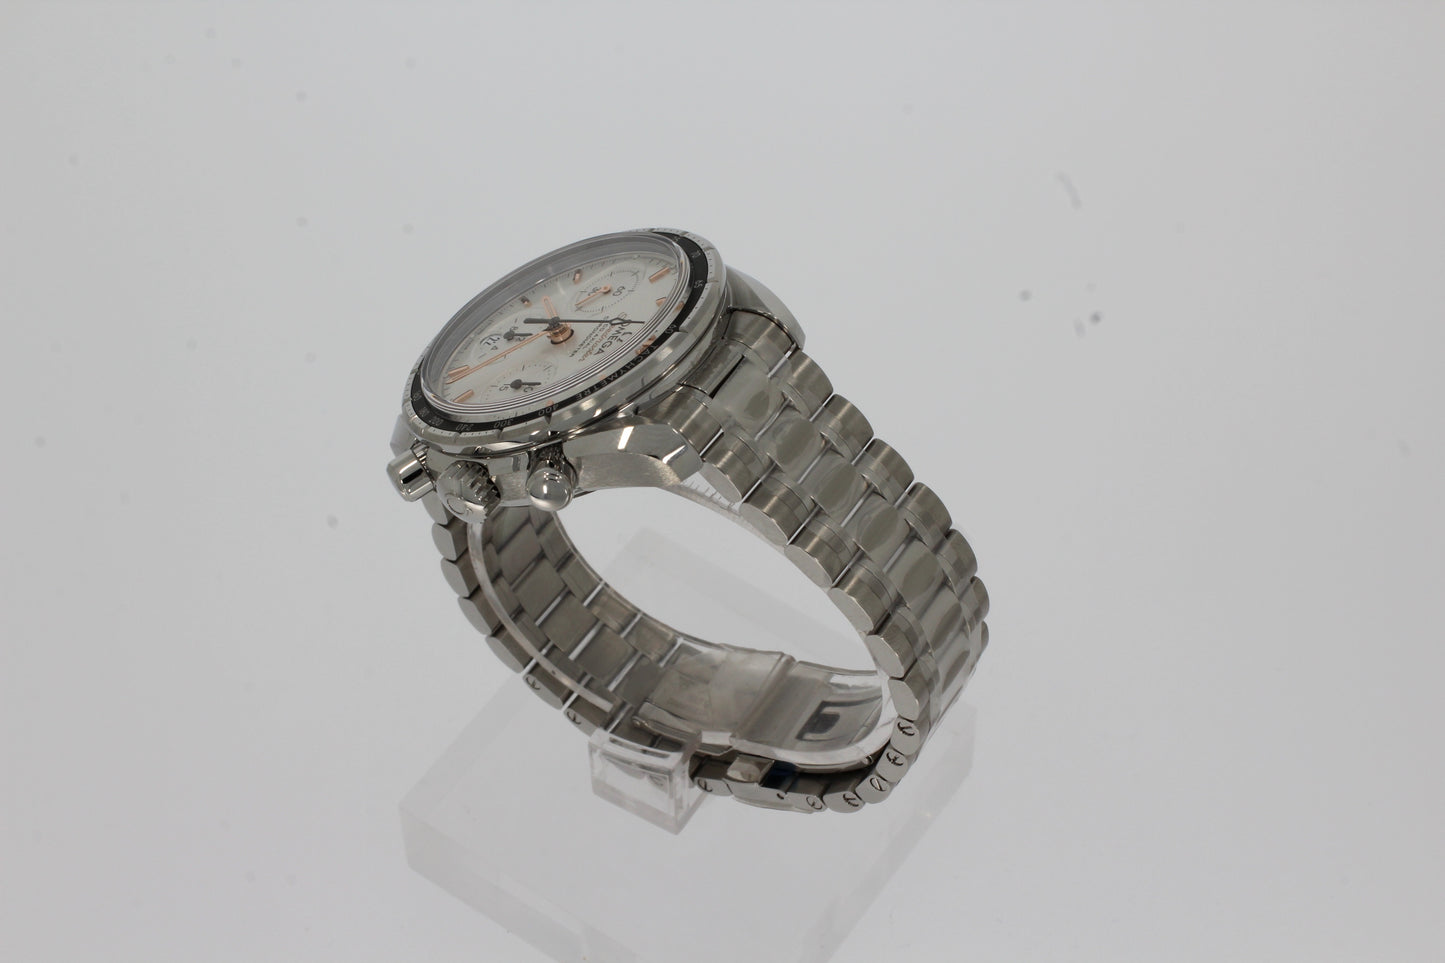 Omega Speedmaster 38 Co-Axial Chronograph 324.30.38.50.02.001 acier blanc 38 mm, avec bracelet en acier